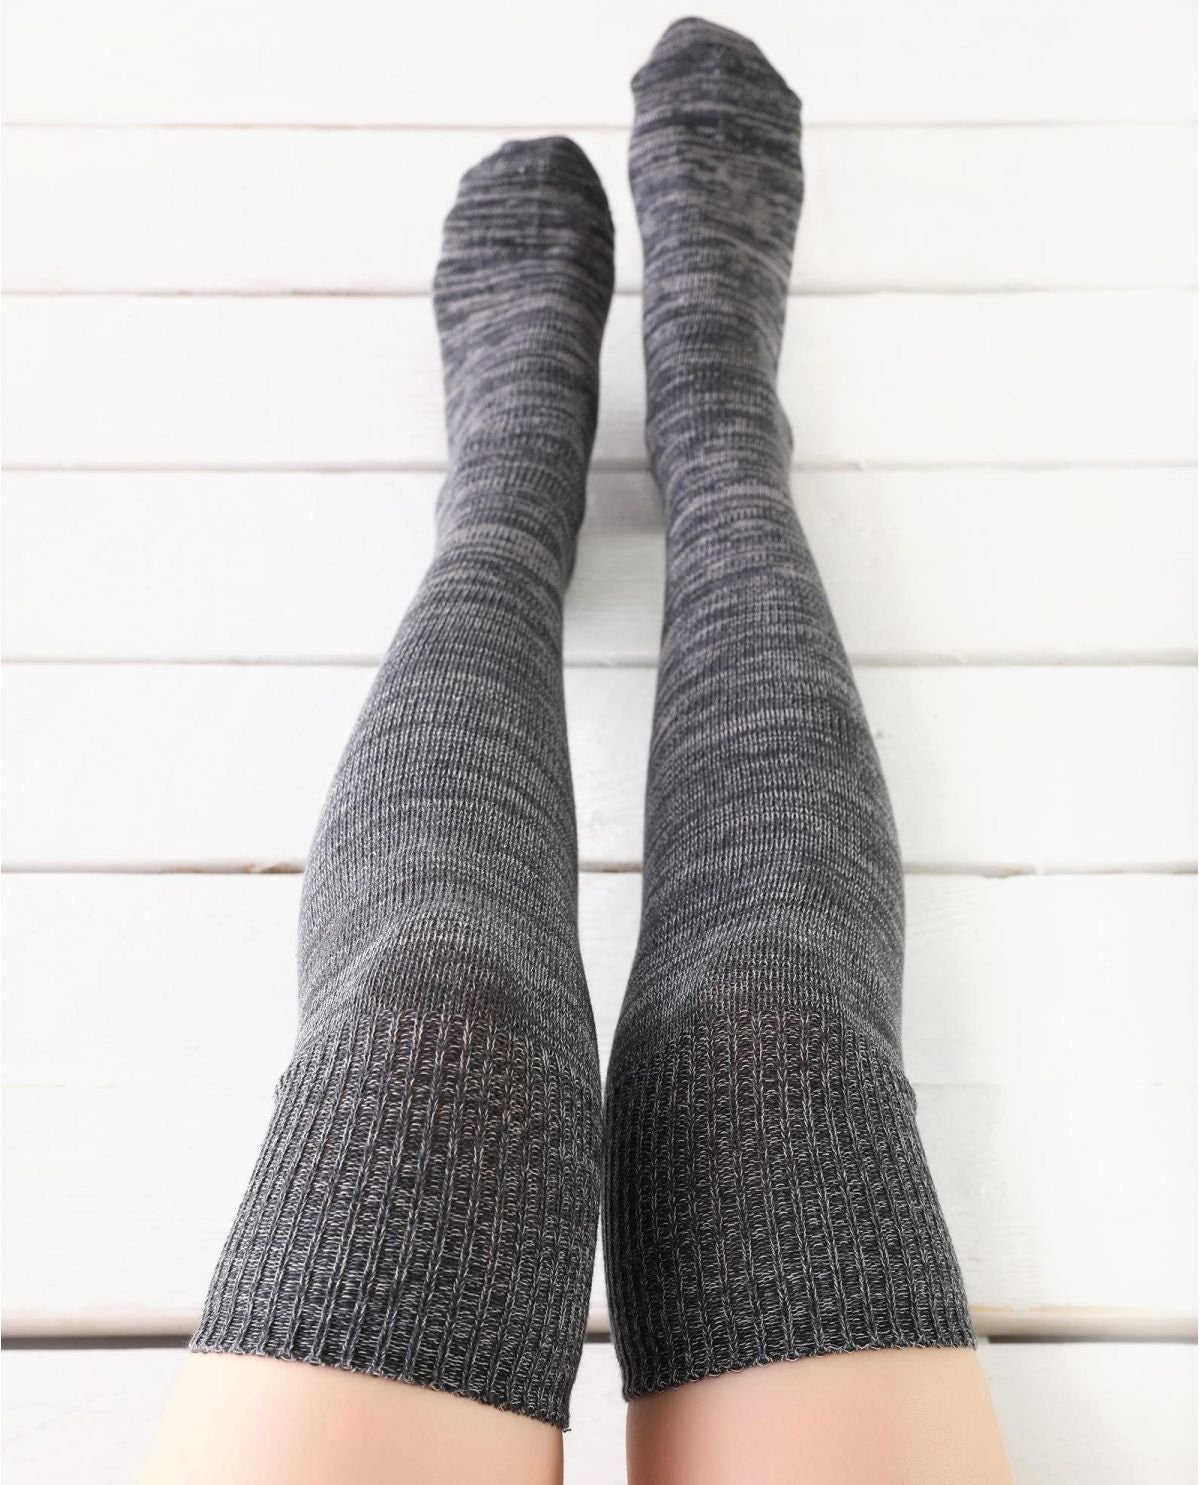 Women's Long Over the Knee Socks, Knee Thigh High Cotton Gray-Turquoise, Gift Idea for Her, Great Boot Socks, Stocking Gift, Sweater Socks